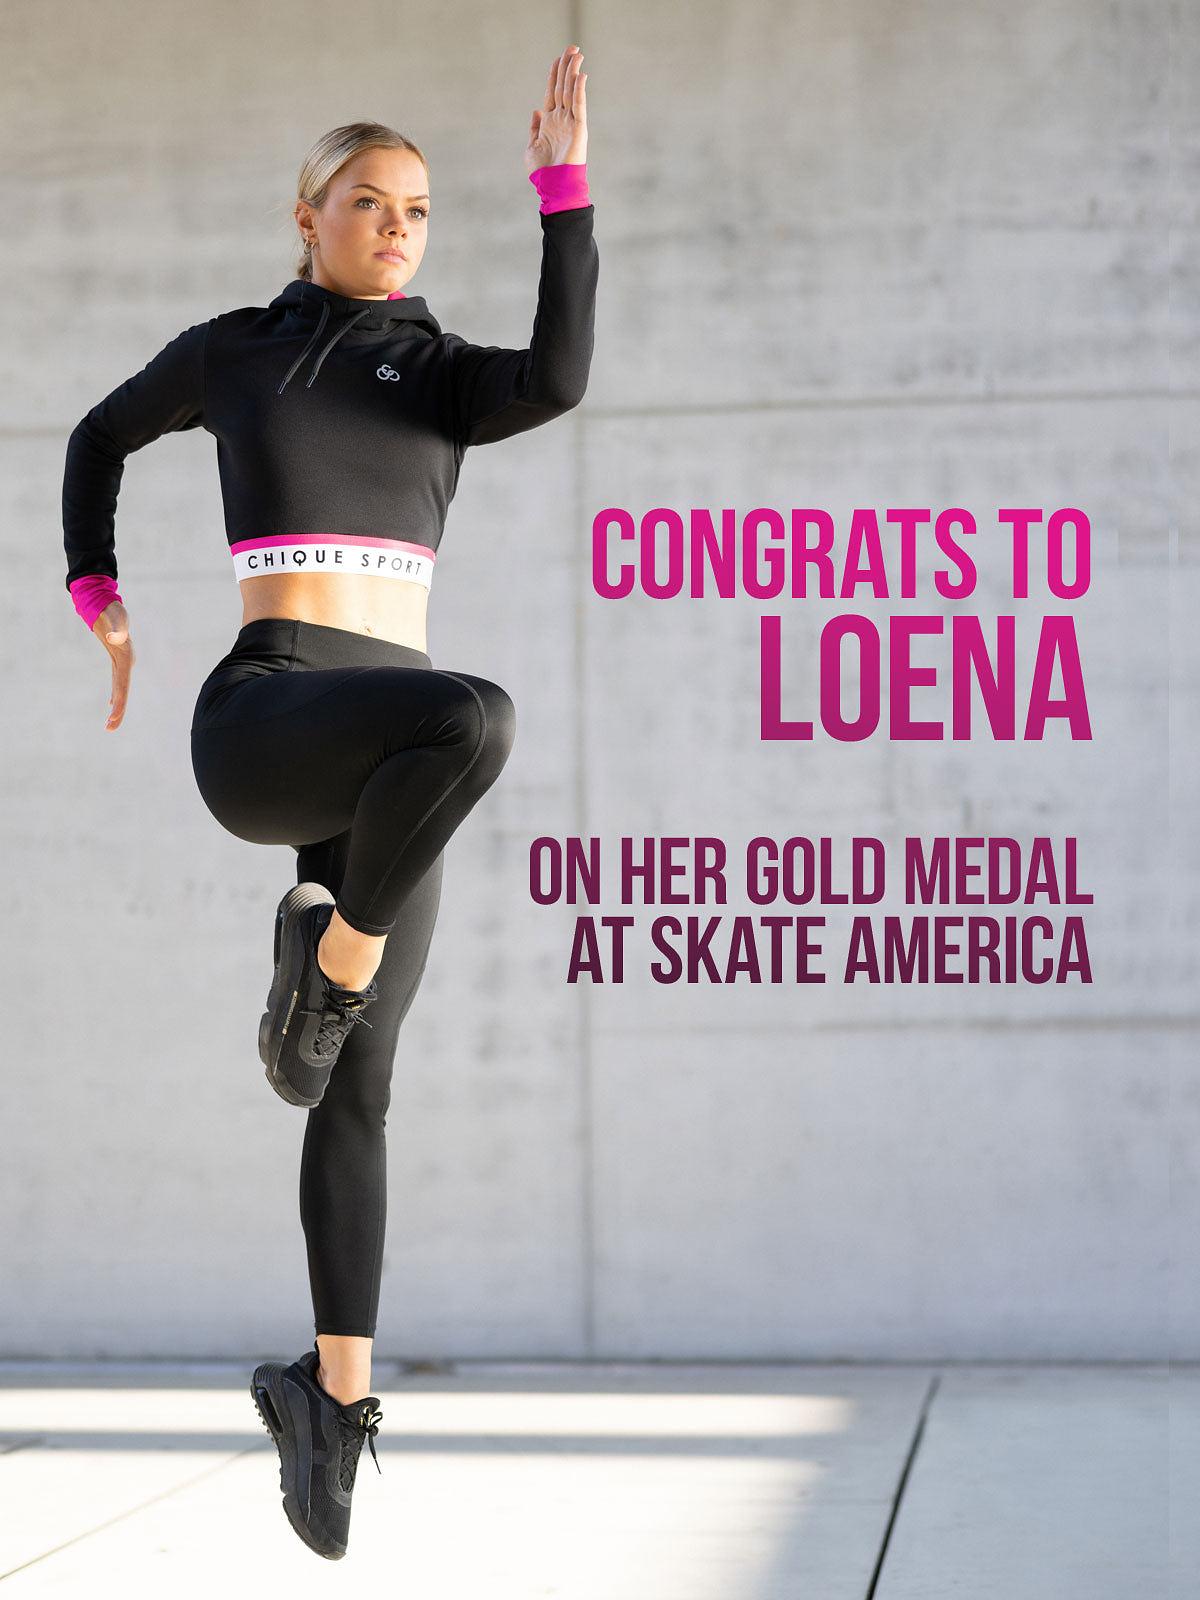 Congratulations to our ambassador Loena Hendrickx on her gold